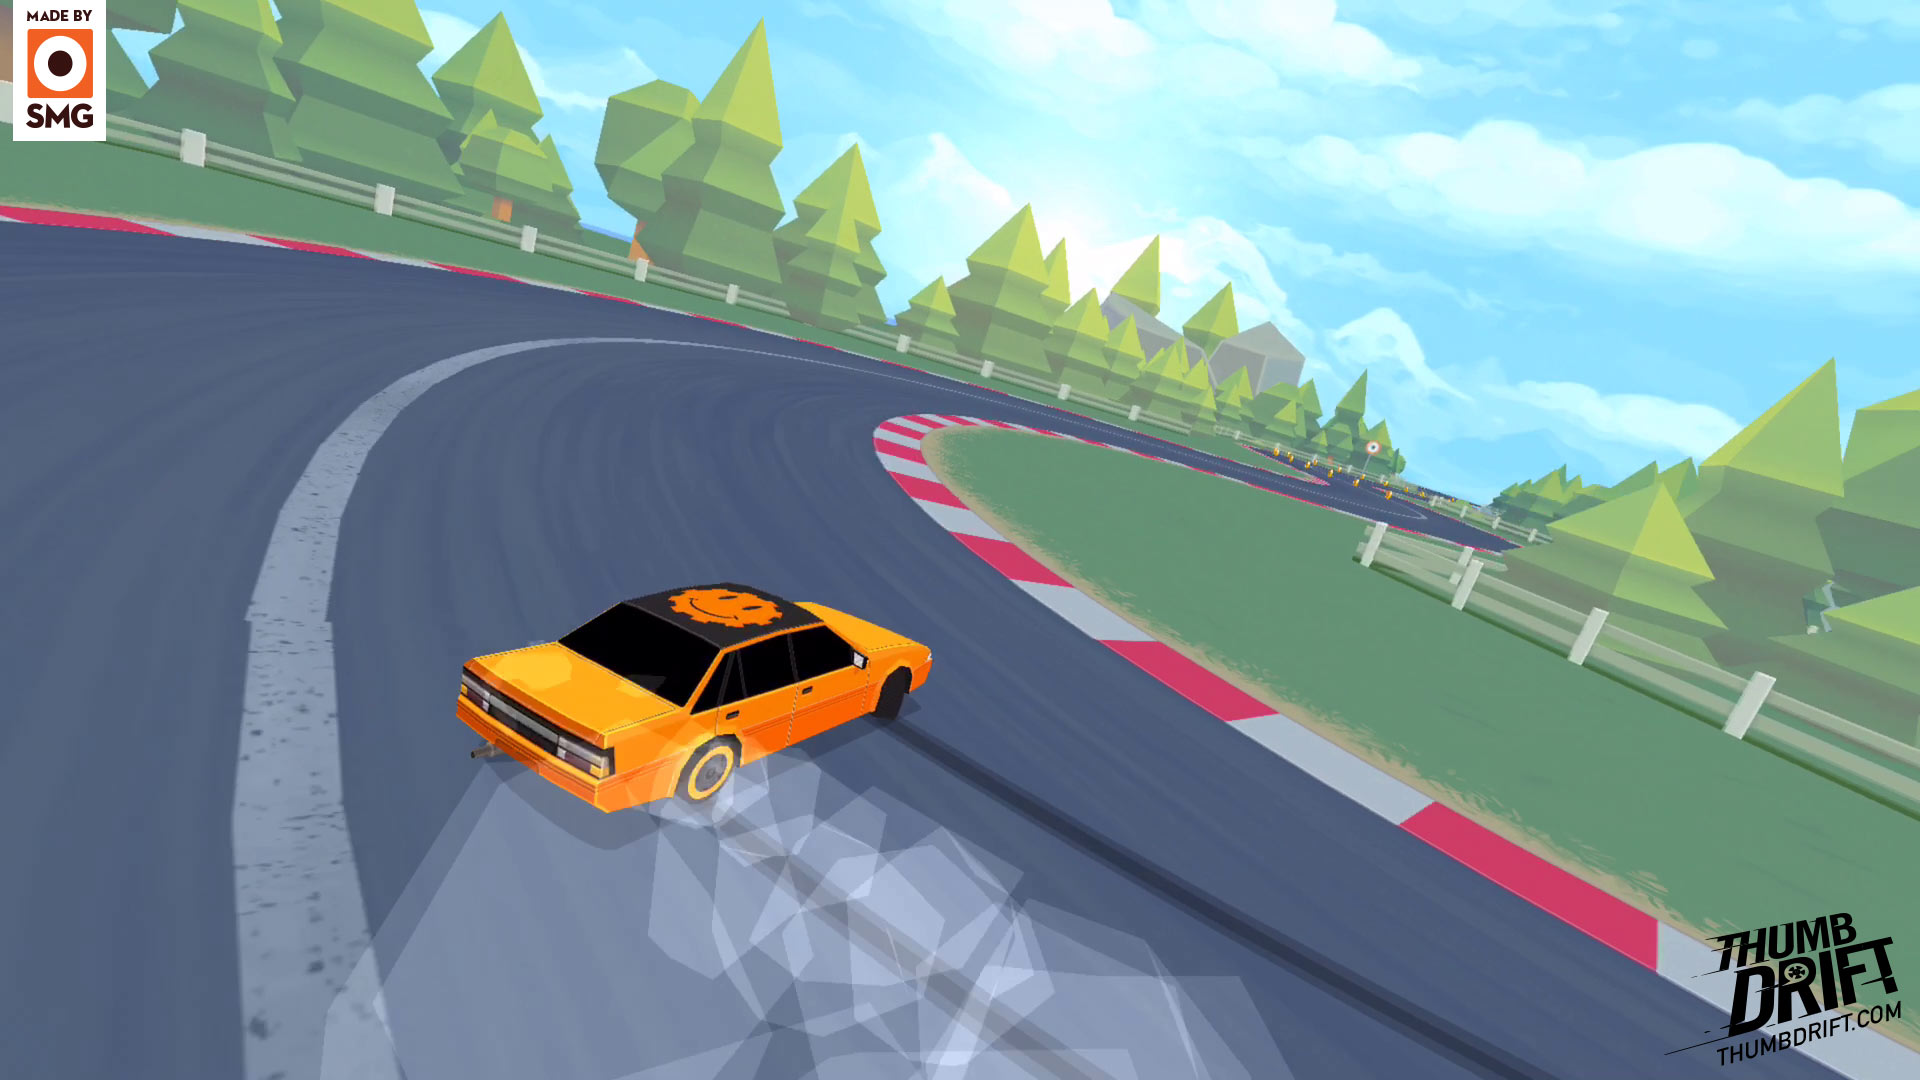 Thumb Drift - Furious Racing na App Store